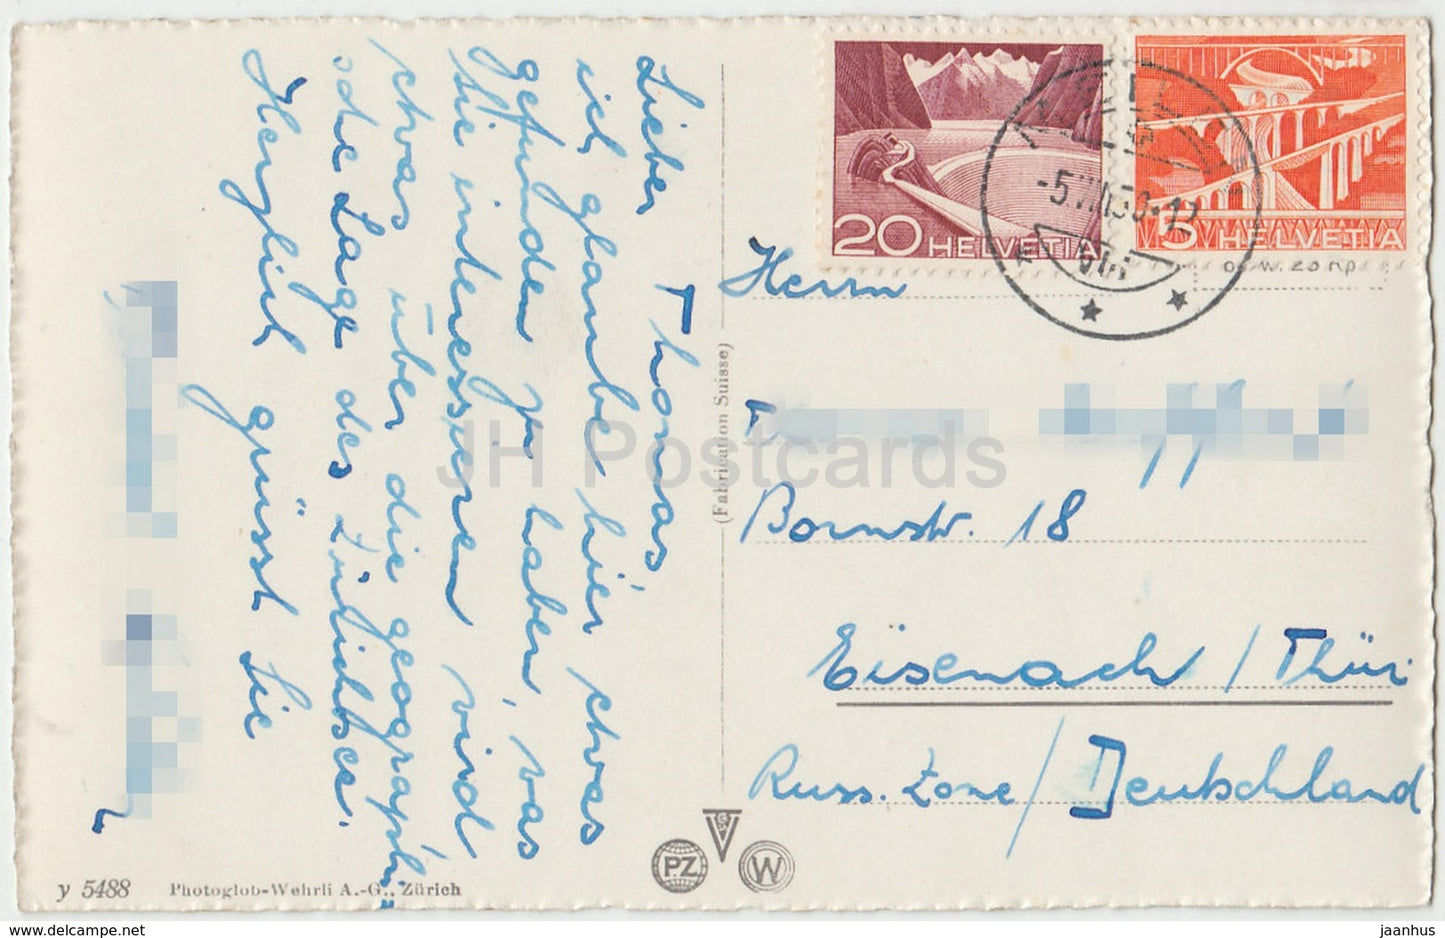 Zurichhorn - Wallishofen - Zollikon - Bendlikon -Ruschlikon - 5488 - Switzerland - old postcard - 1950 - used